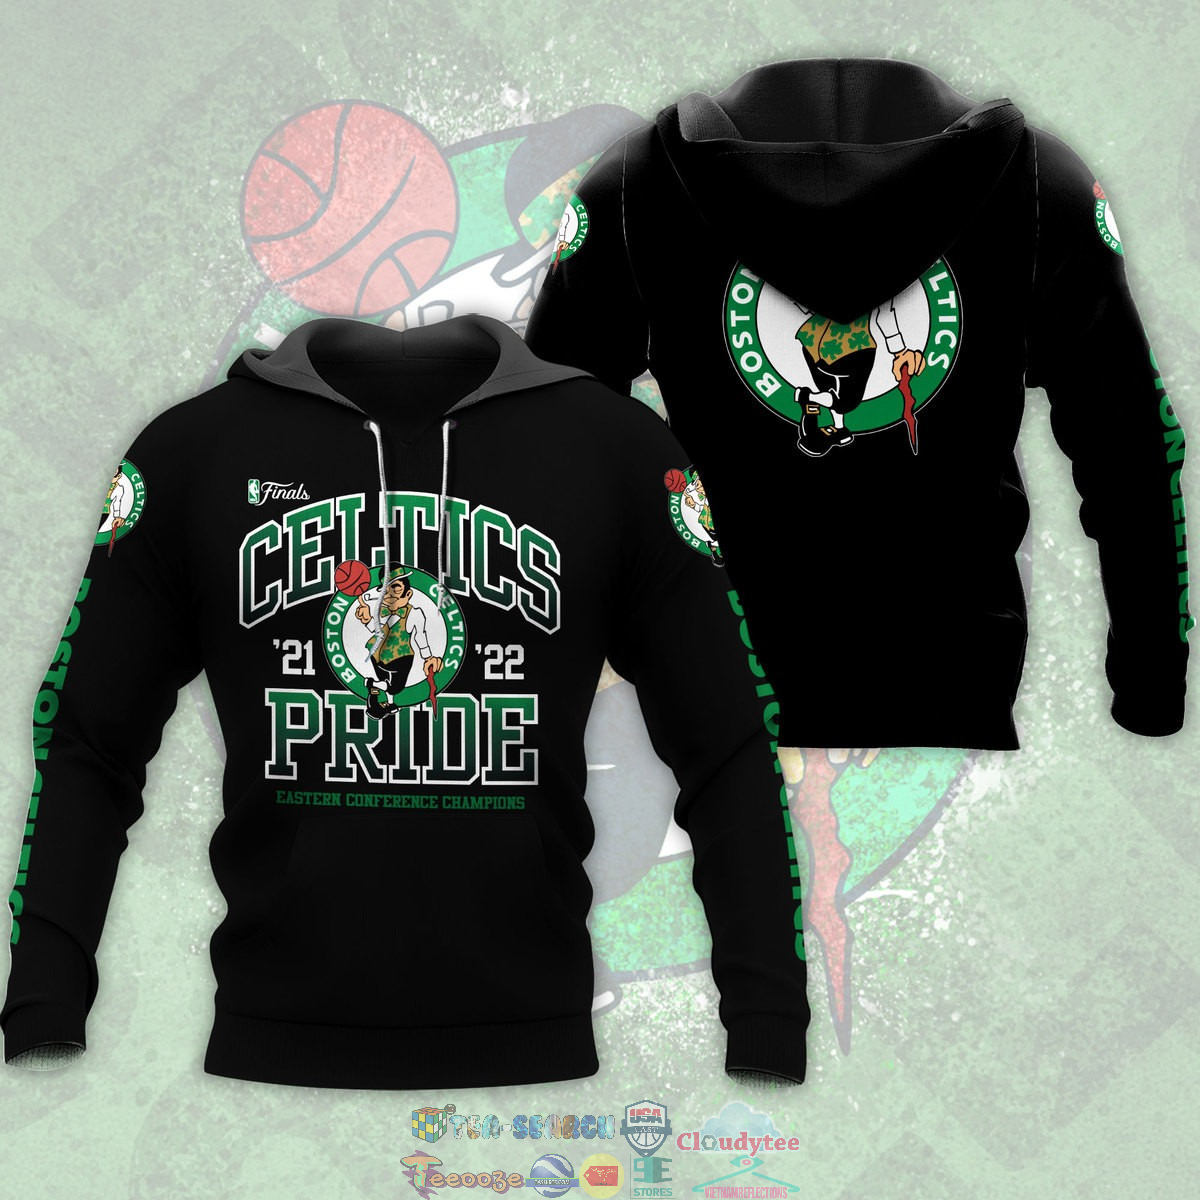 Celtics Pride 21-22 Eastern Conferrence Champions Black 3D hoodie and t-shirt – Saleoff